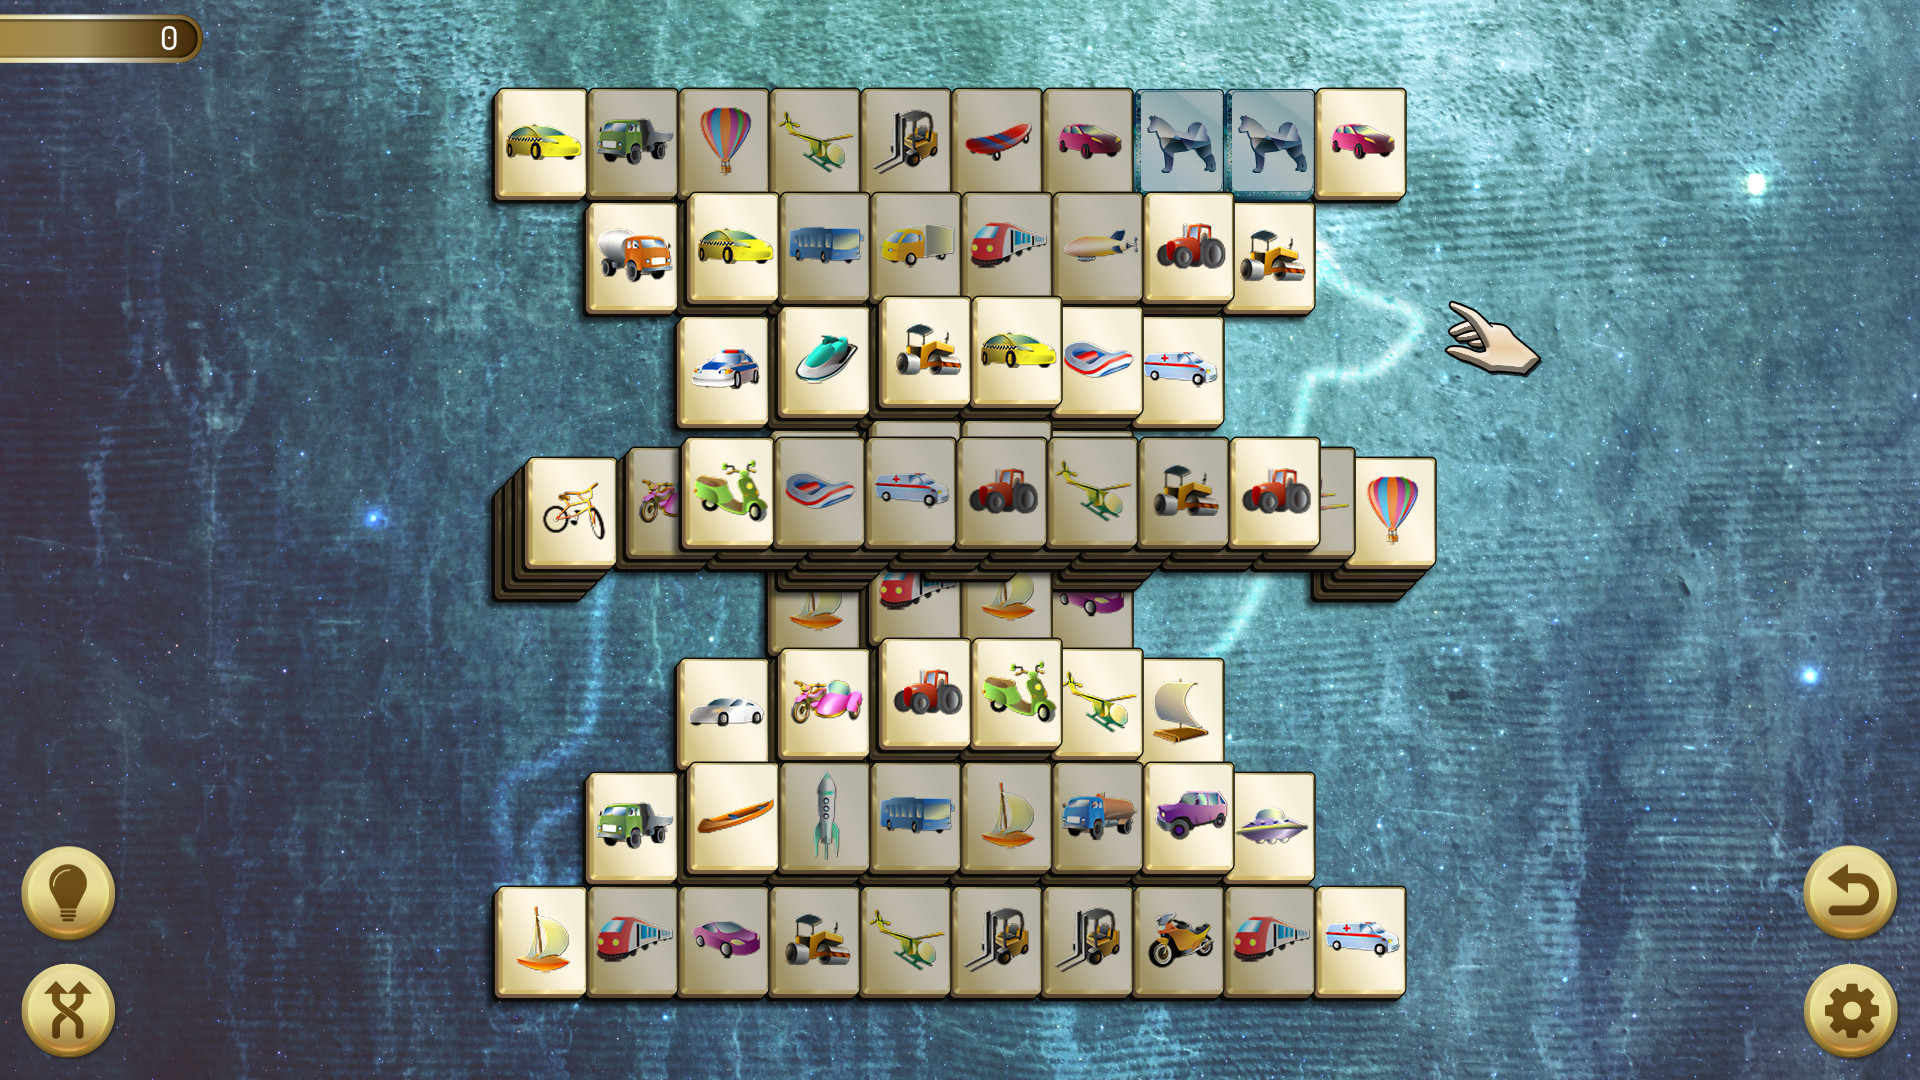 Mahjong Infinity Free Download